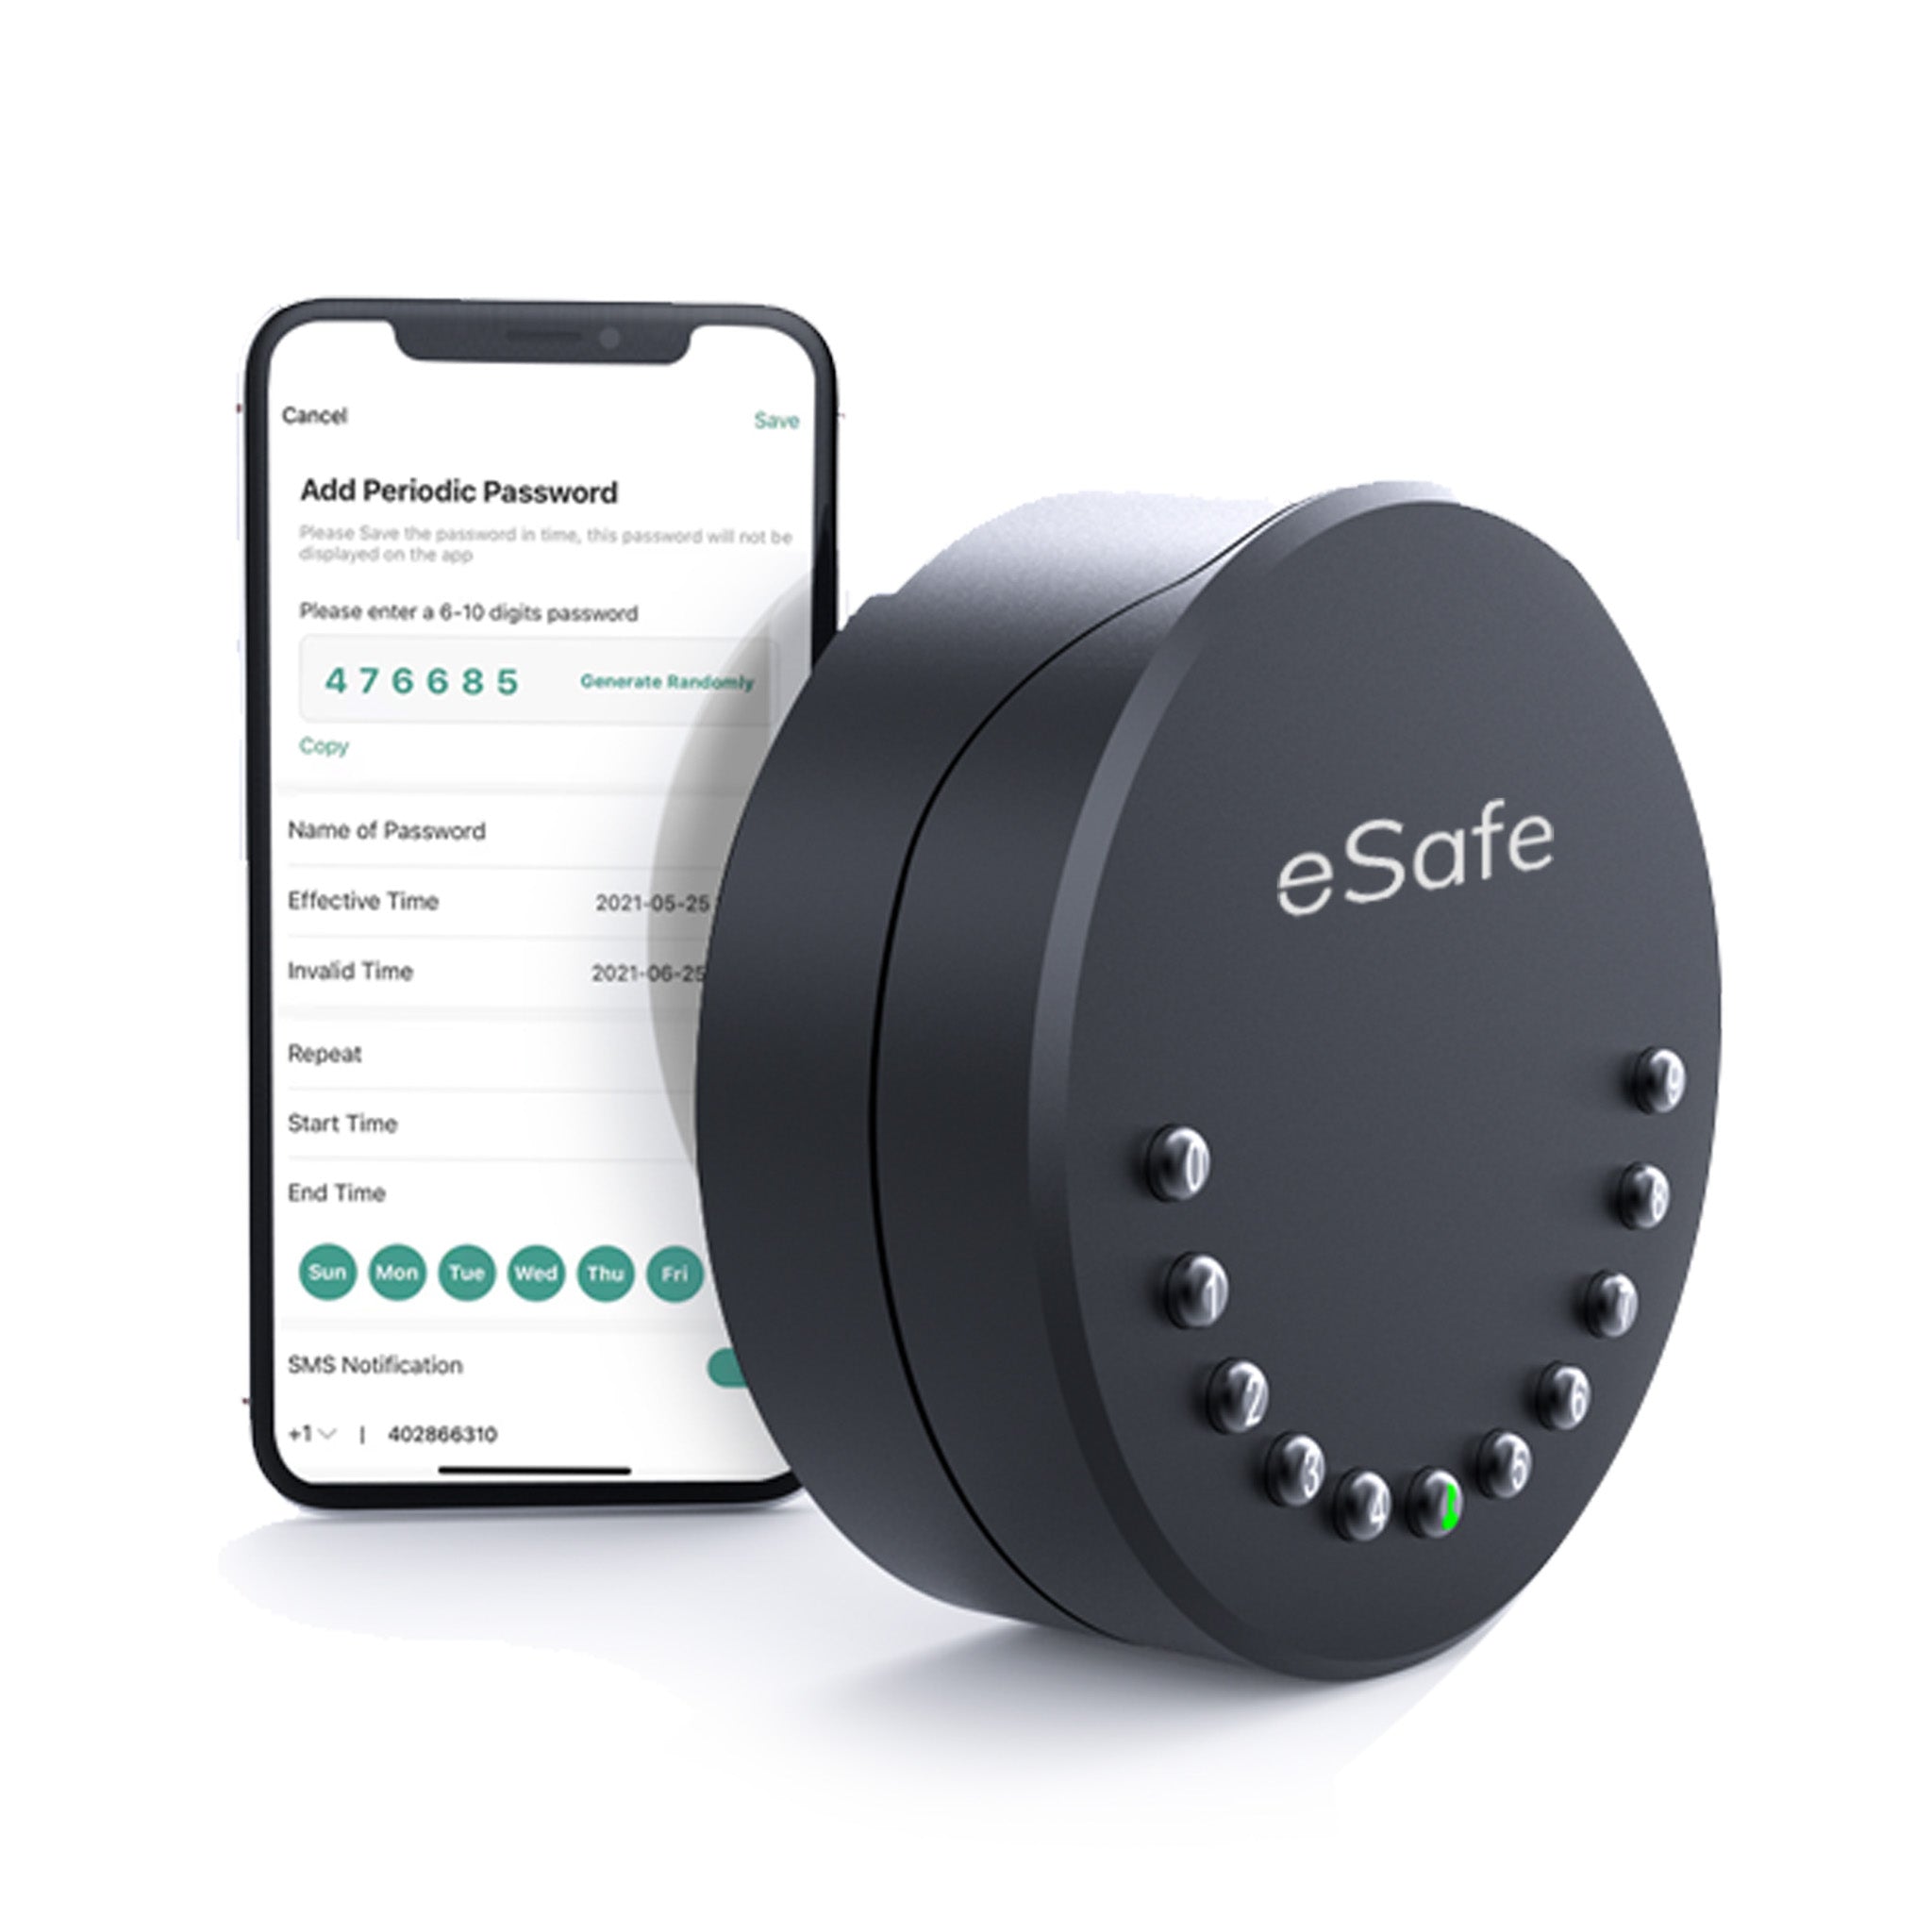 eSafe key box next to smart phone showing the eSafe app